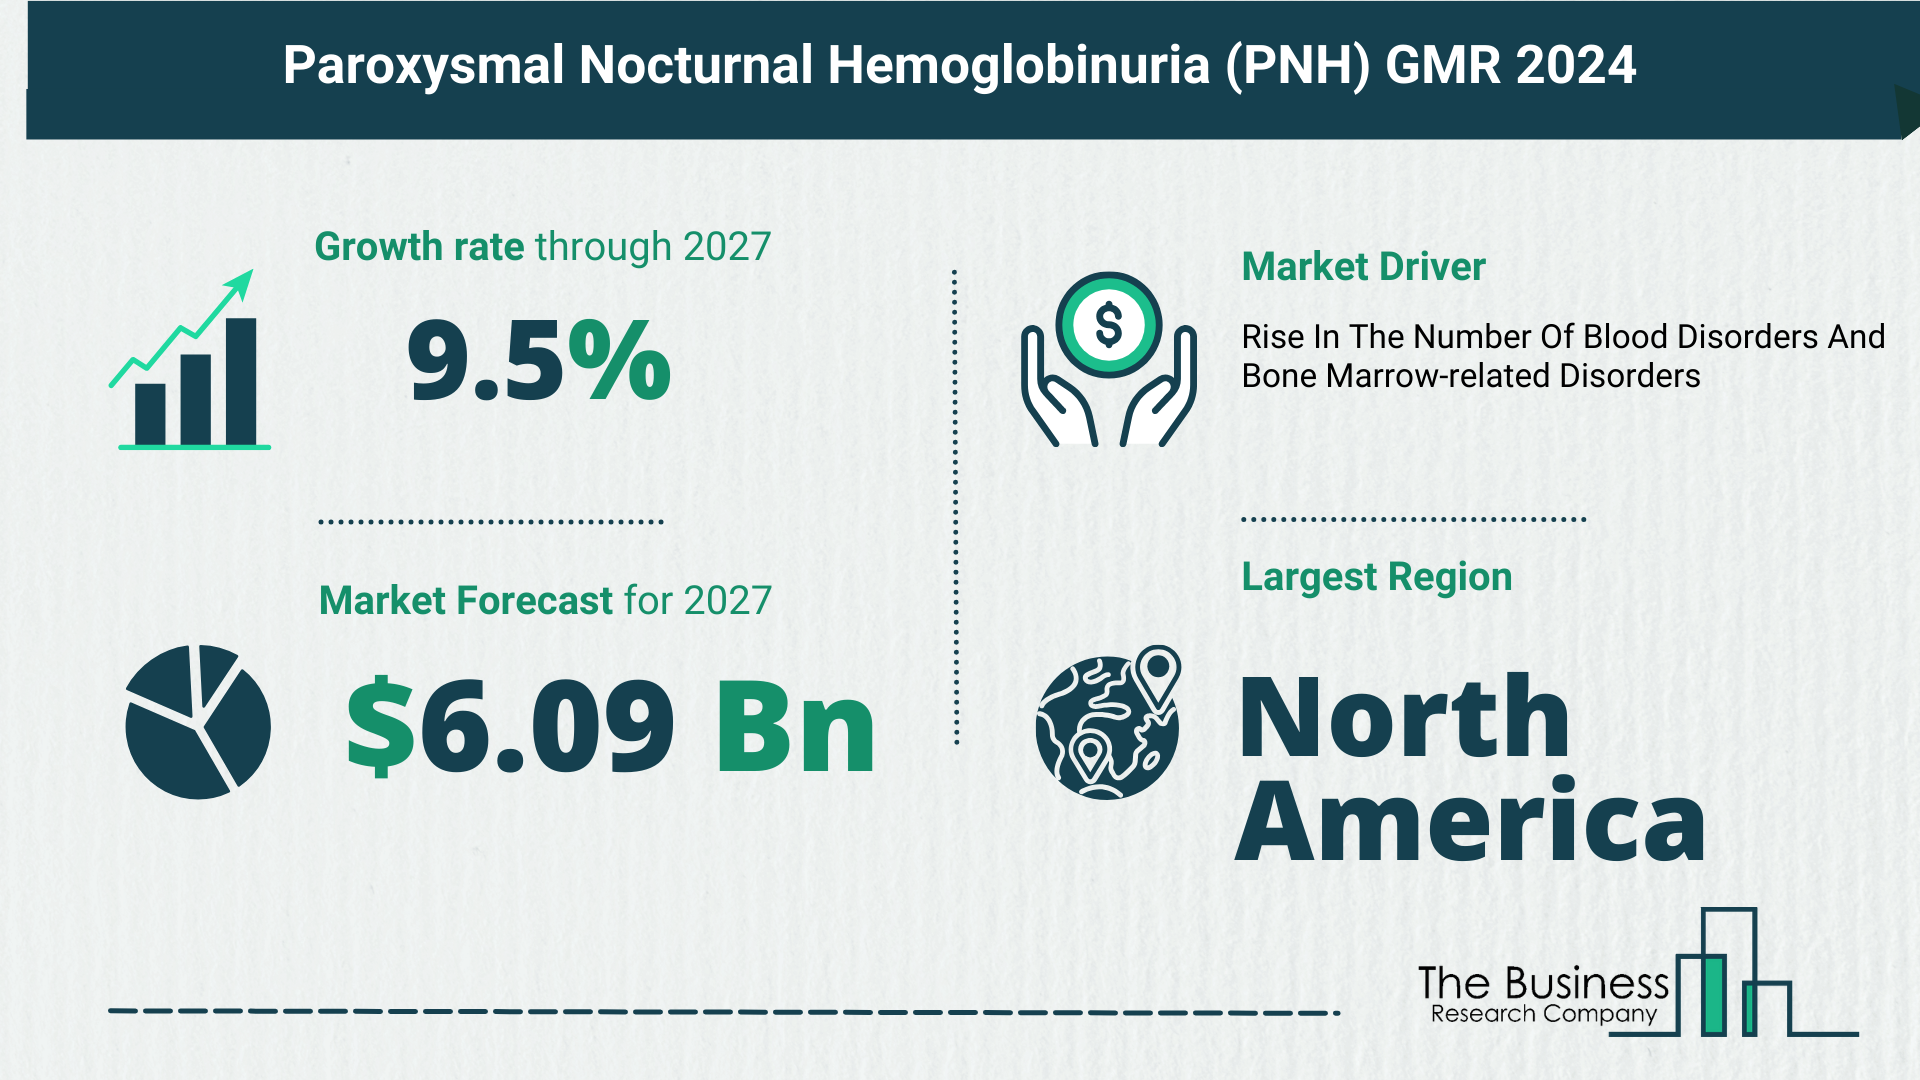 Global Paroxysmal Nocturnal Hemoglobinuria (PNH) Market